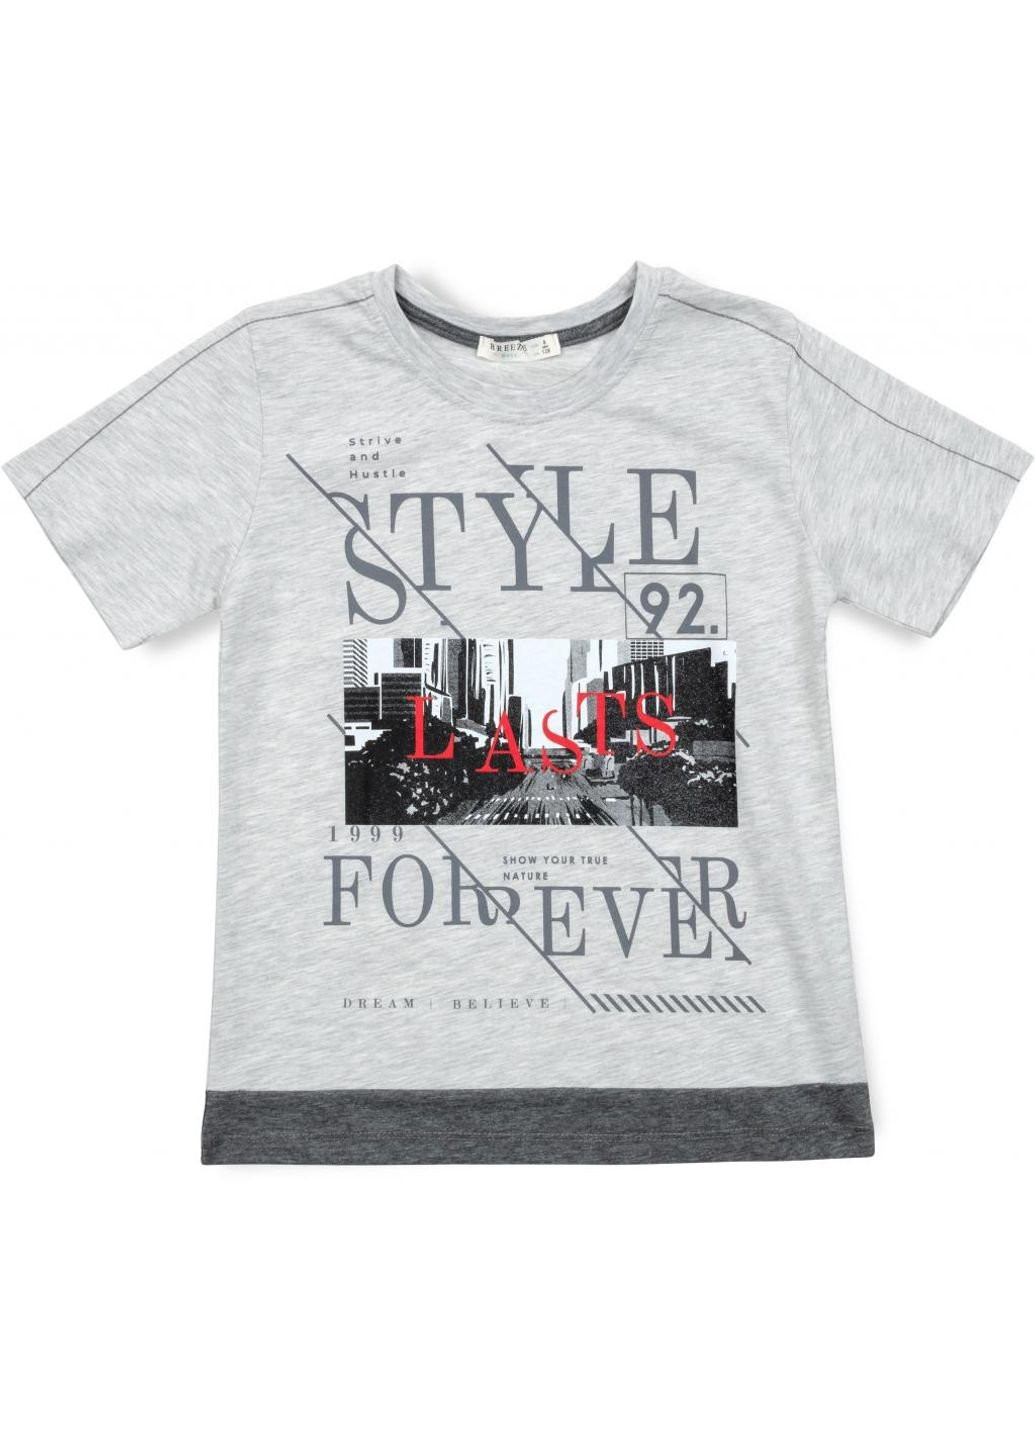 Серая демисезонная футболка детская "style forever" (14535-128b-gray) Breeze